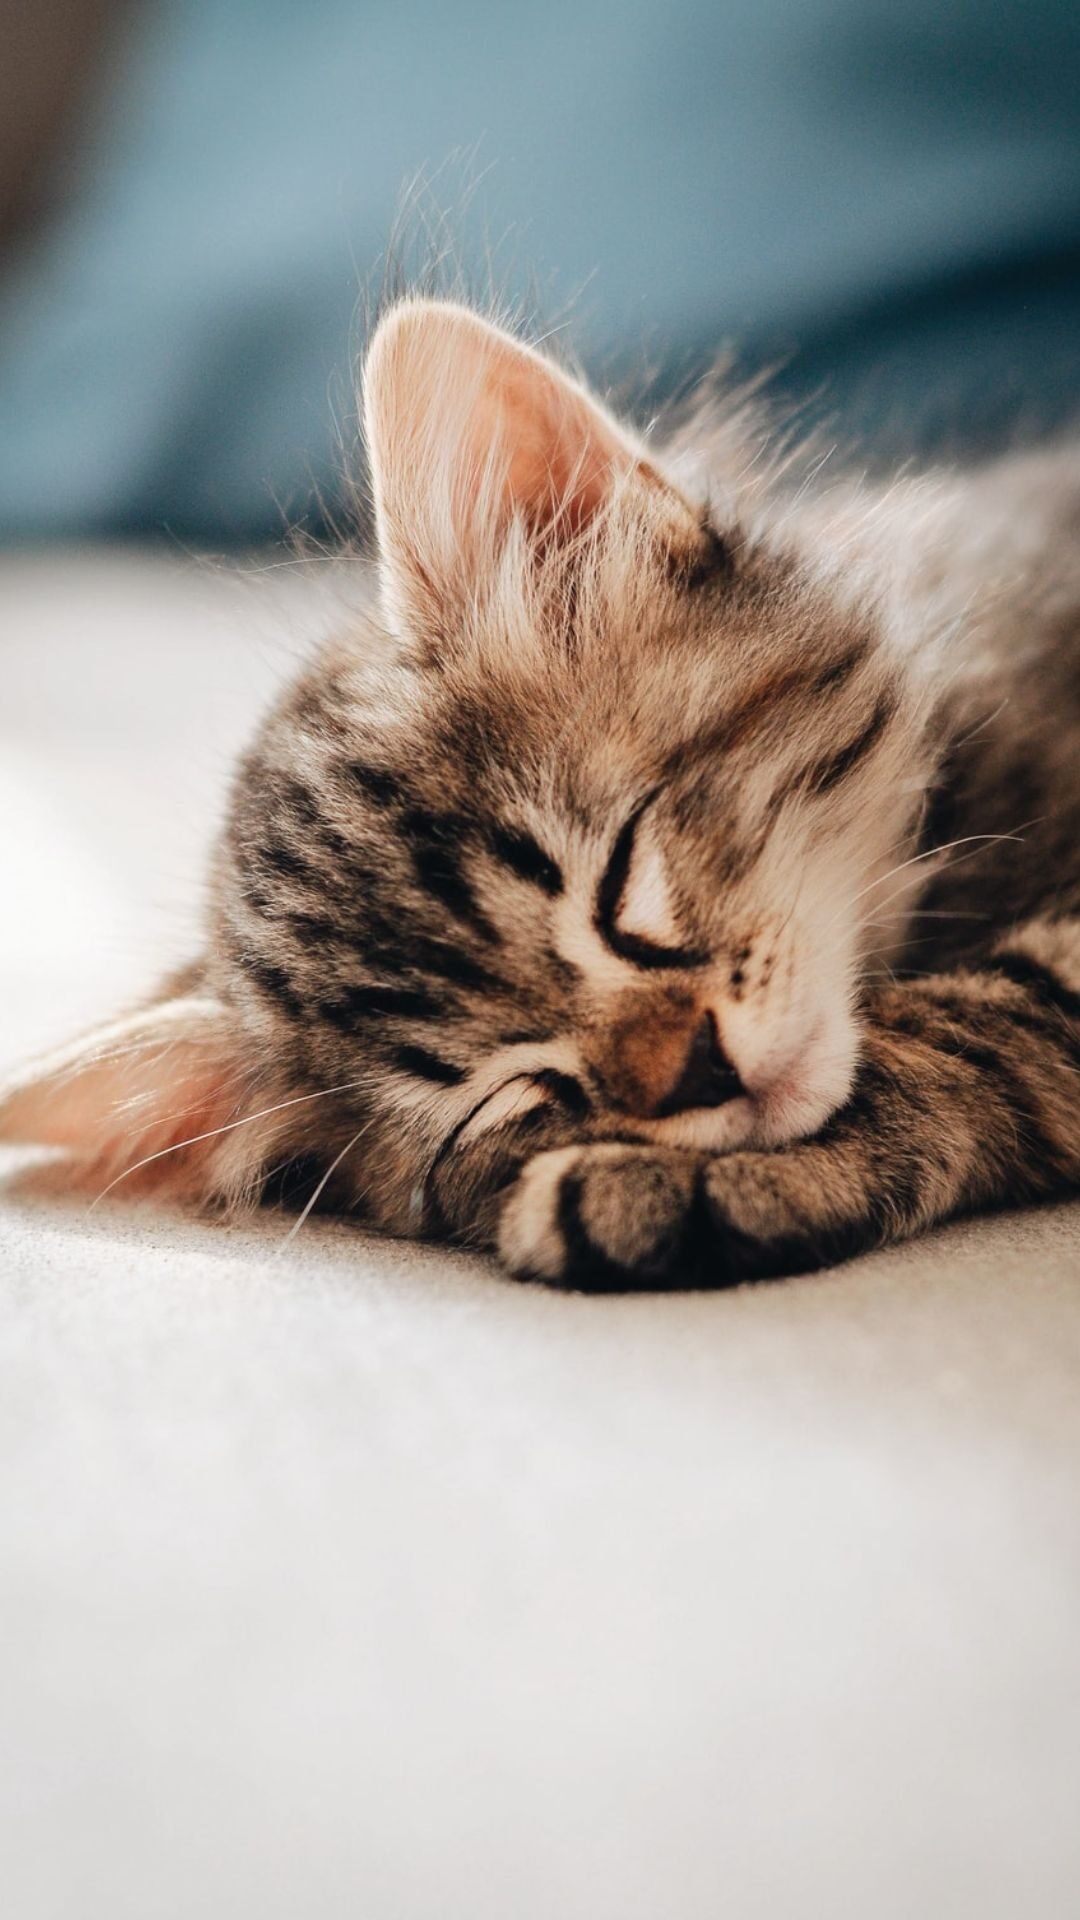 Cute Cat Sleeping Wallpaper Download | MobCup